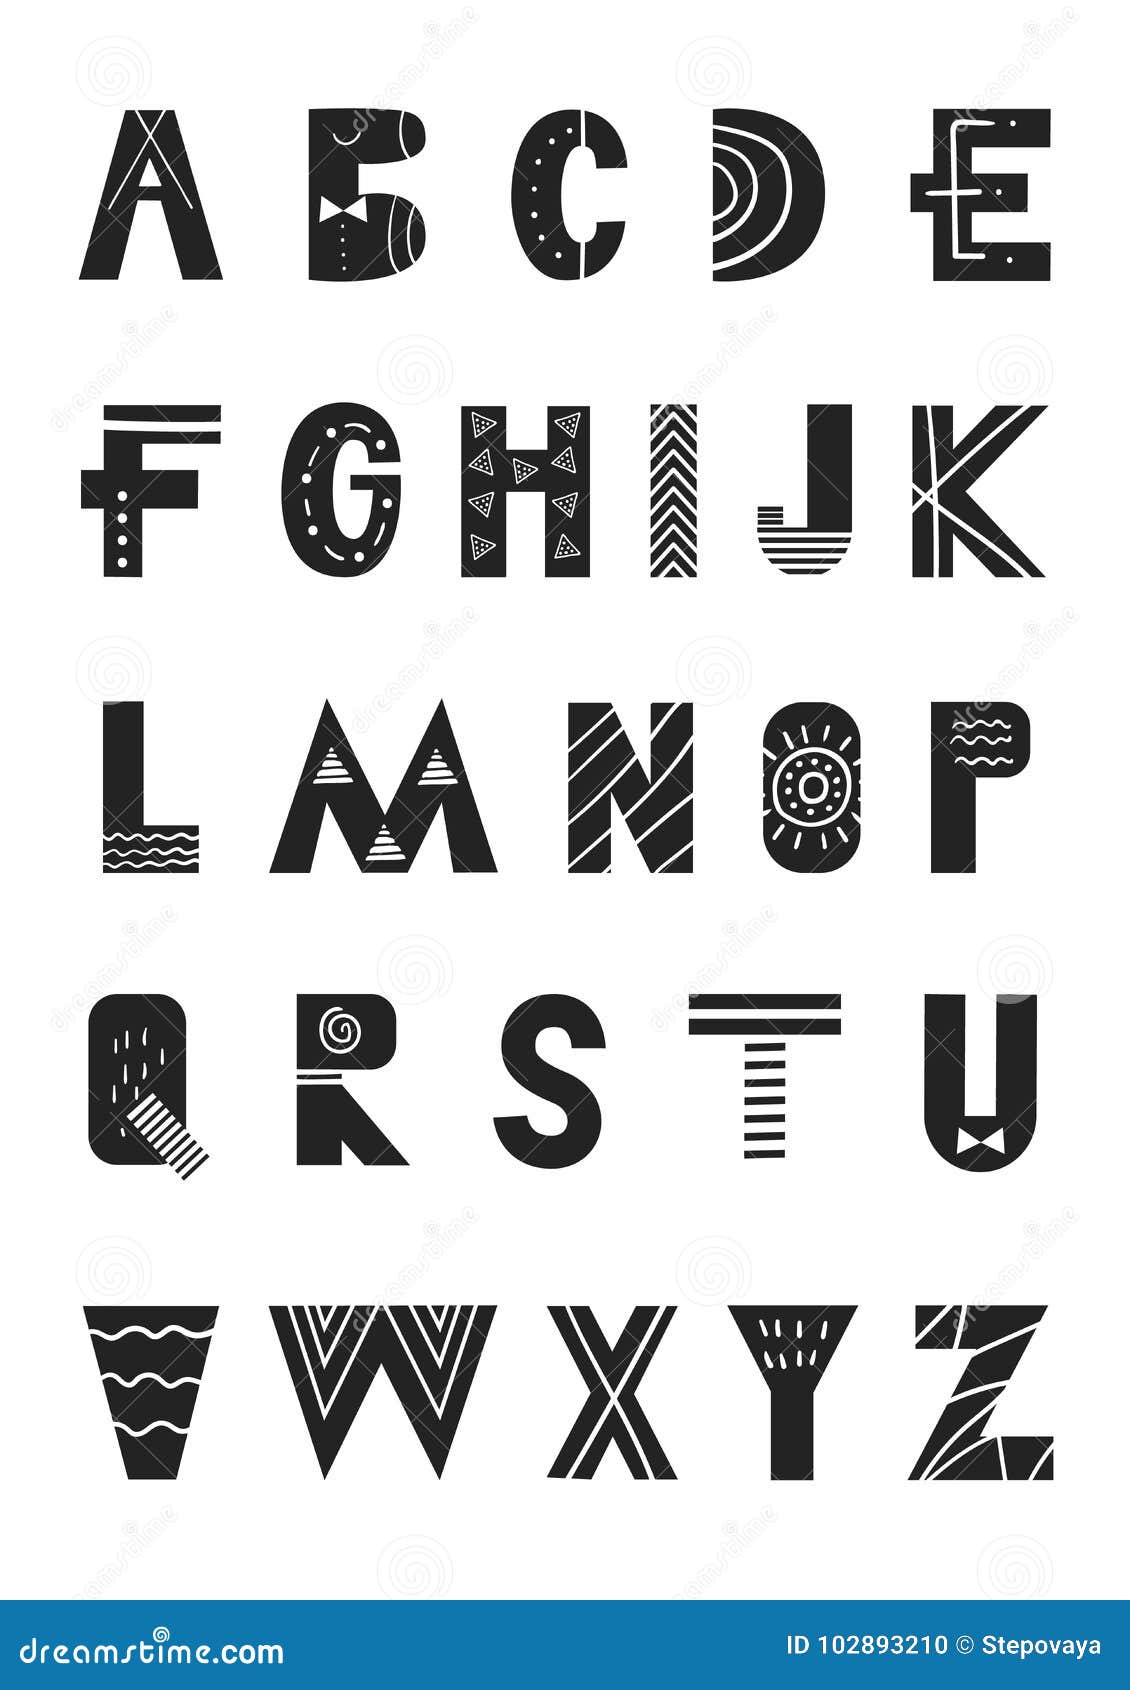 LATIN Latina Alphabet Poster, Learn Latin Letters